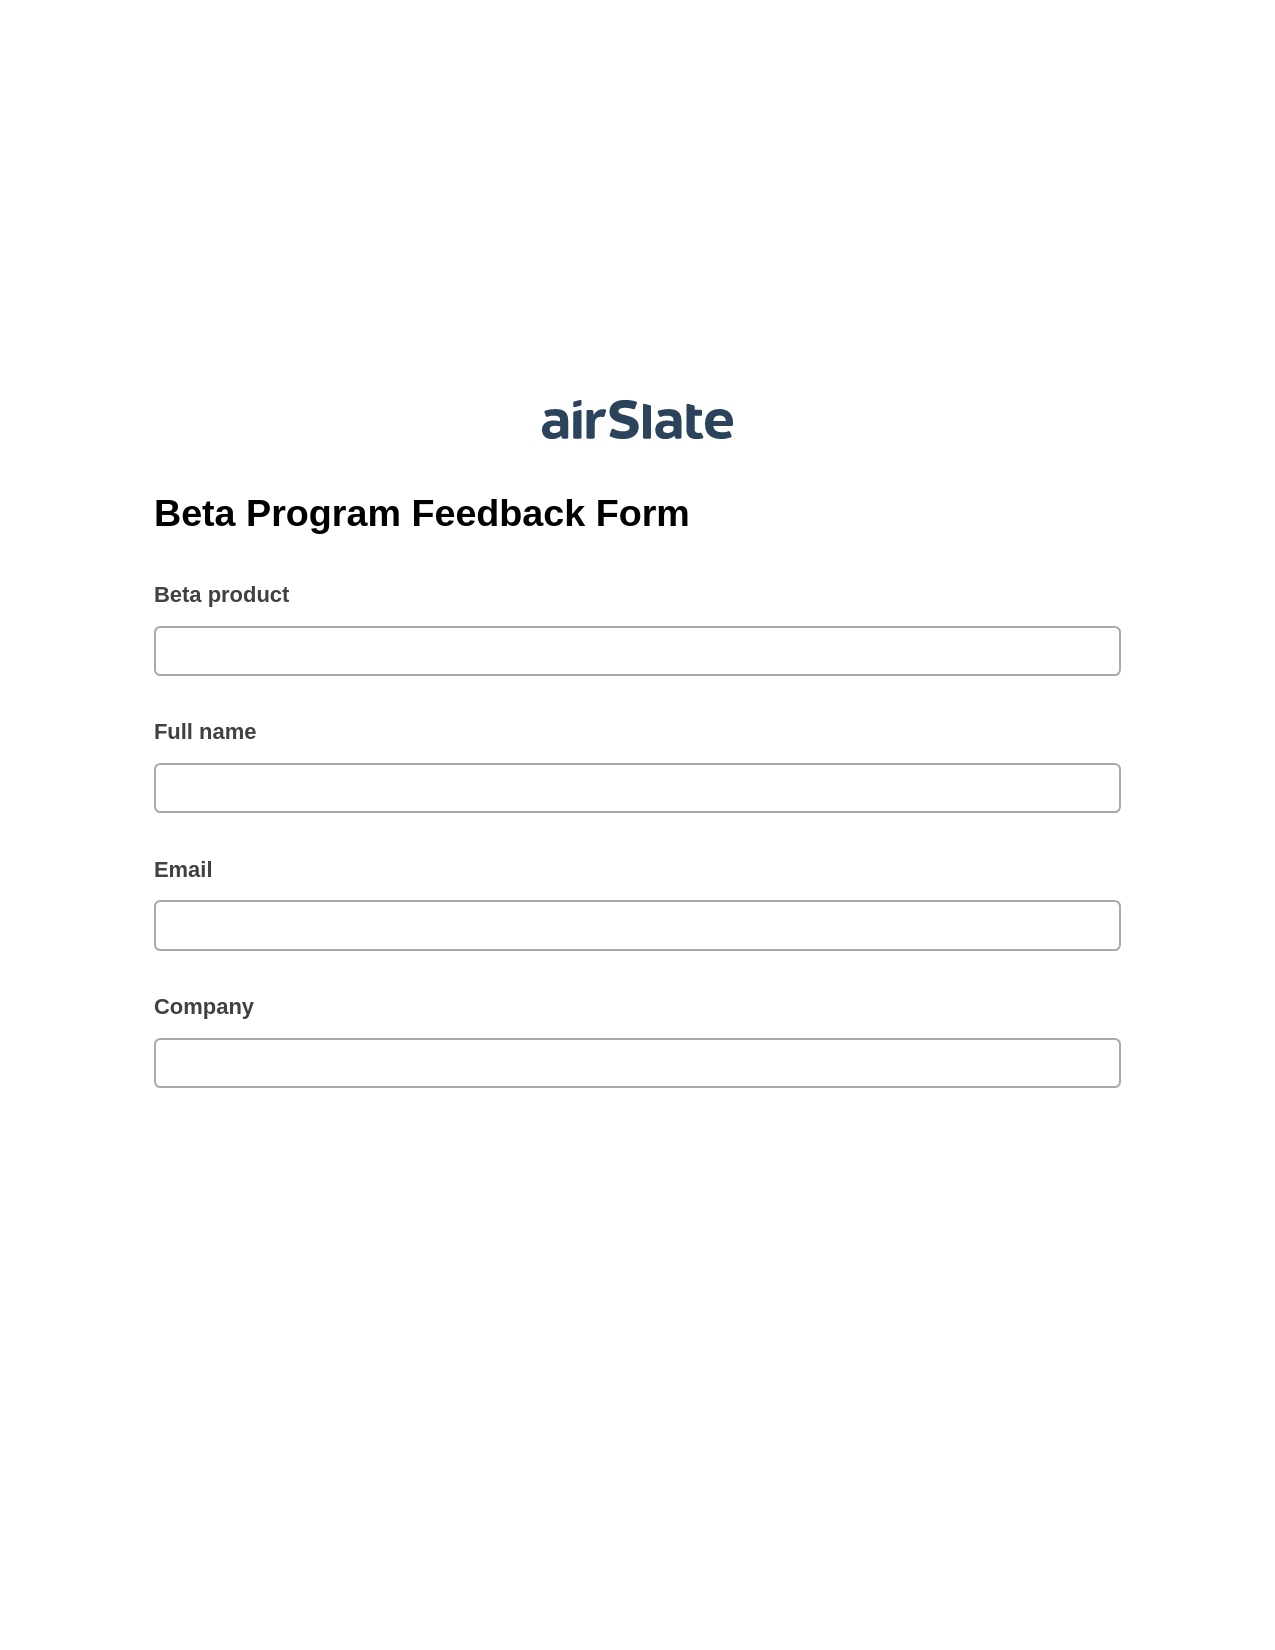 Beta Program Feedback Form Pre-fill Slate from MS Dynamics 365 Records Bot, SendGrid send Campaign bot, Archive to SharePoint Folder Bot